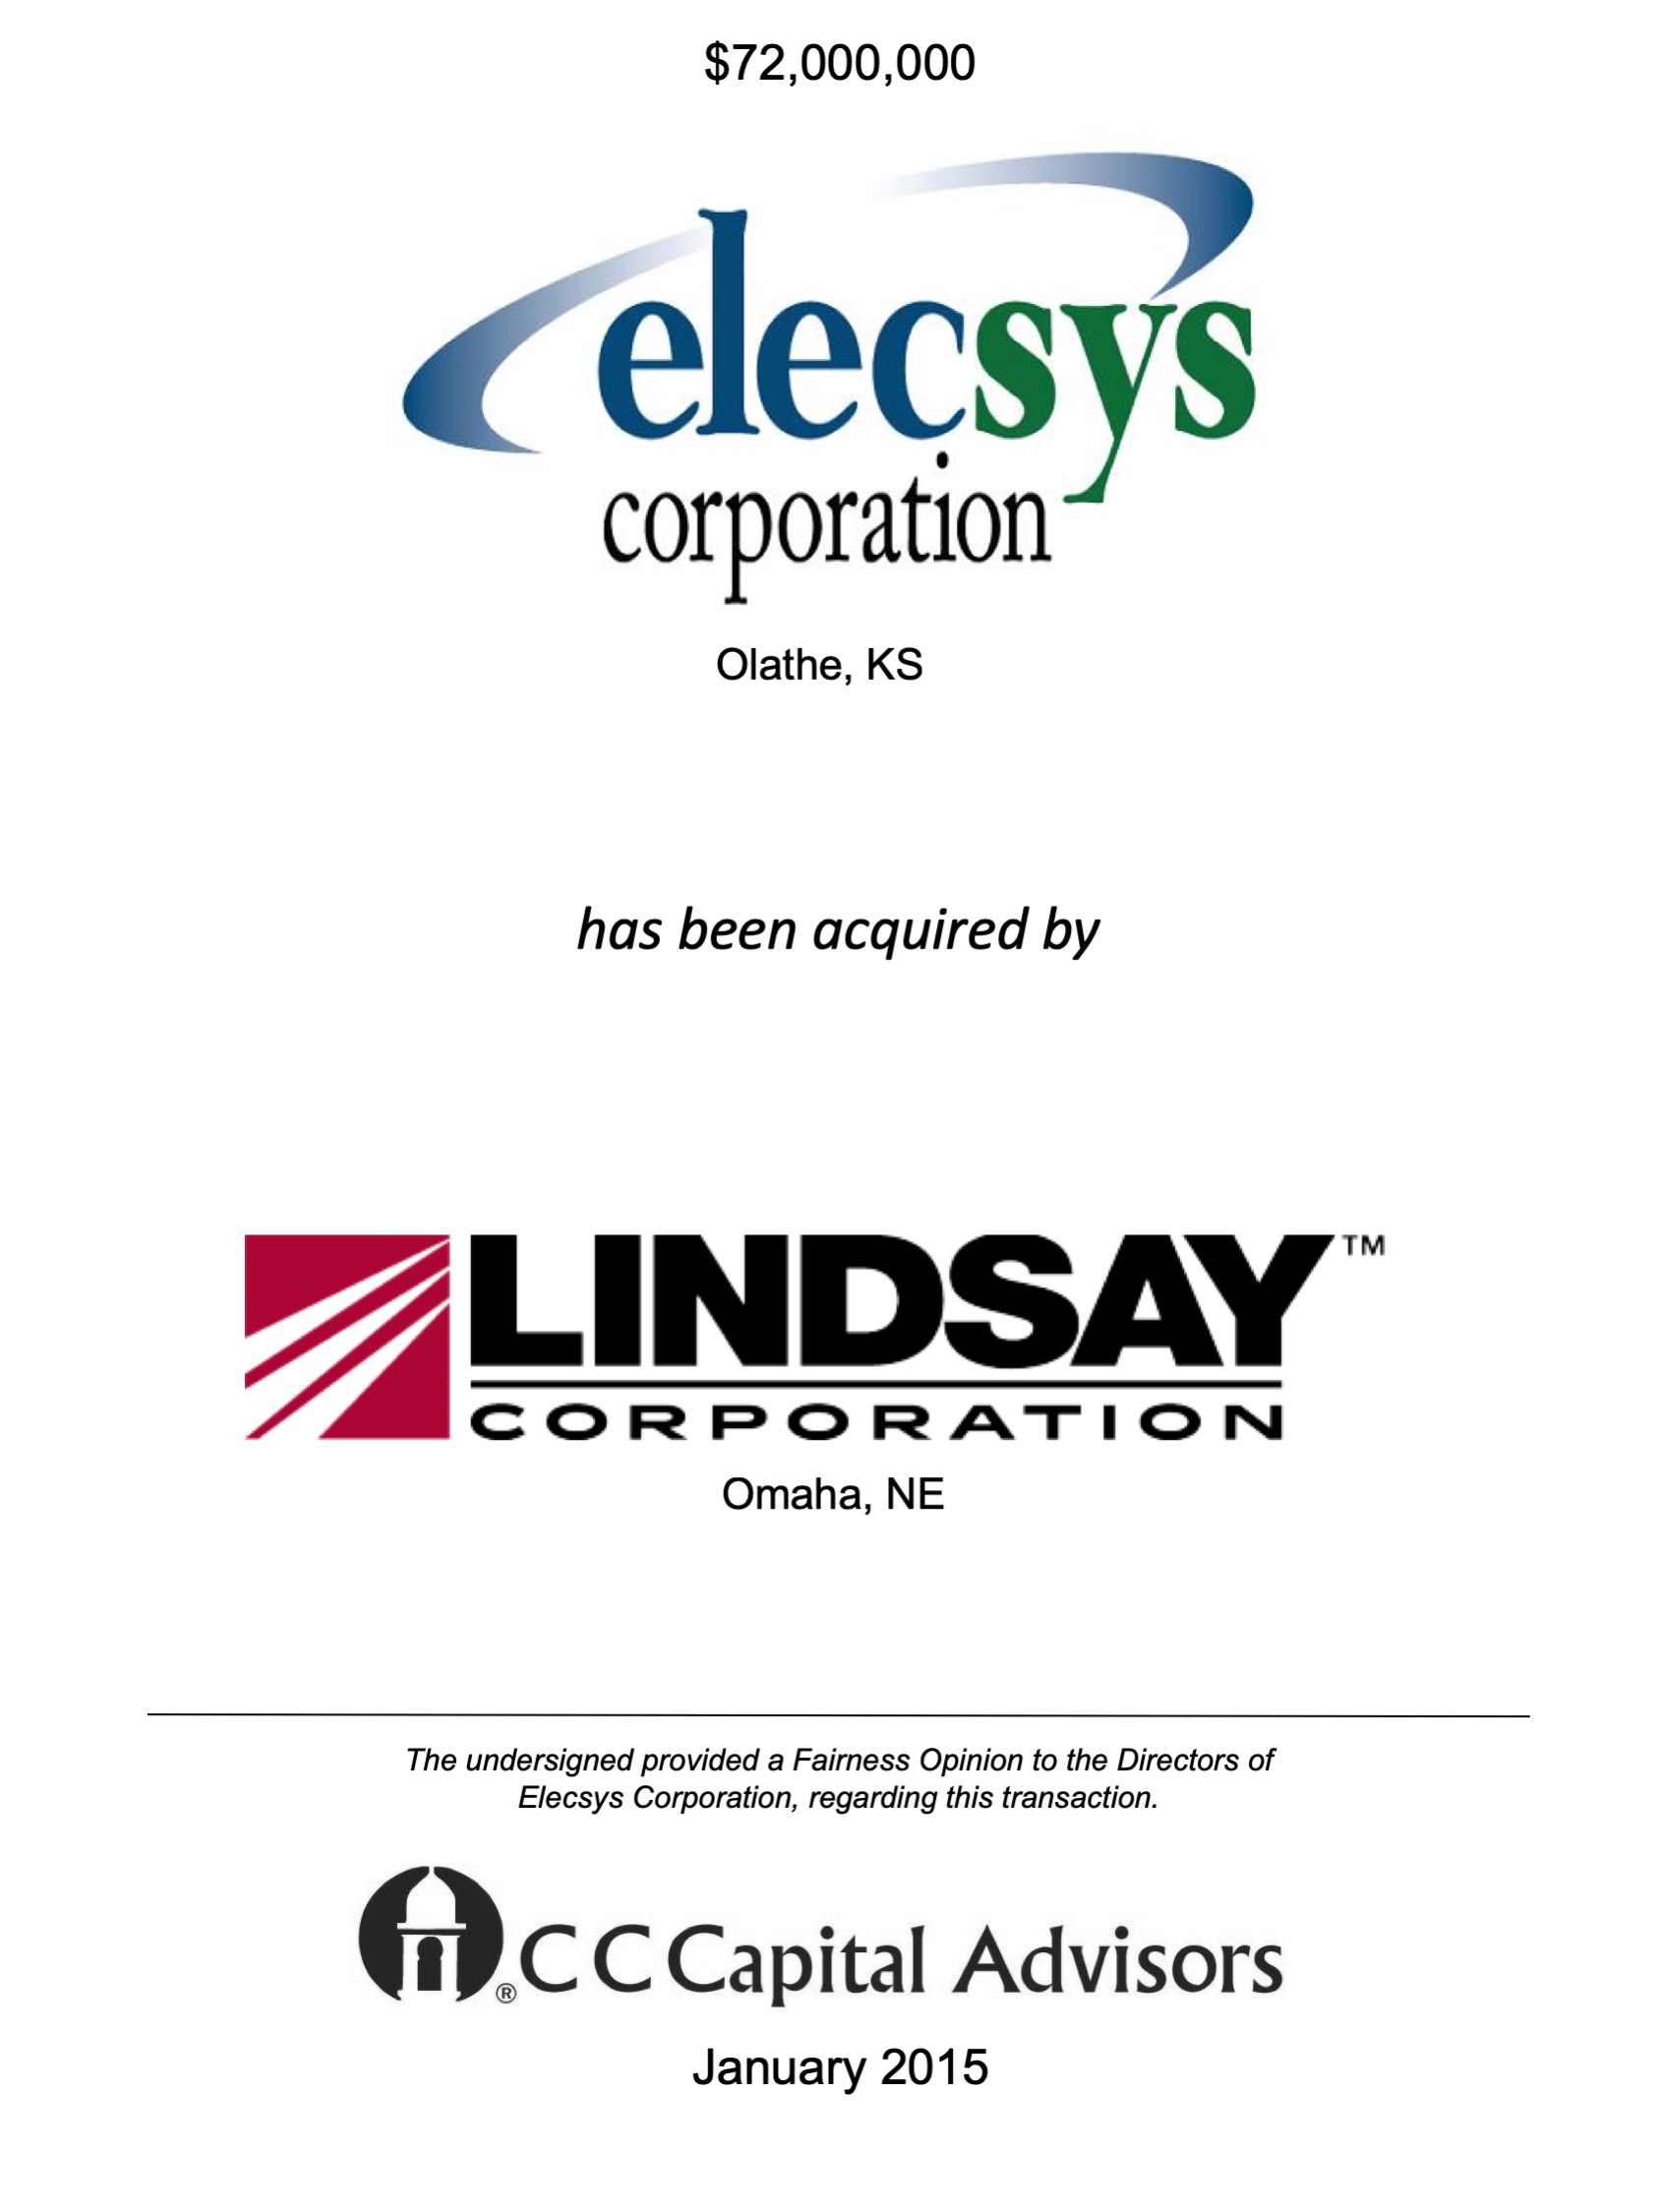 Elecsys Corporation transaction